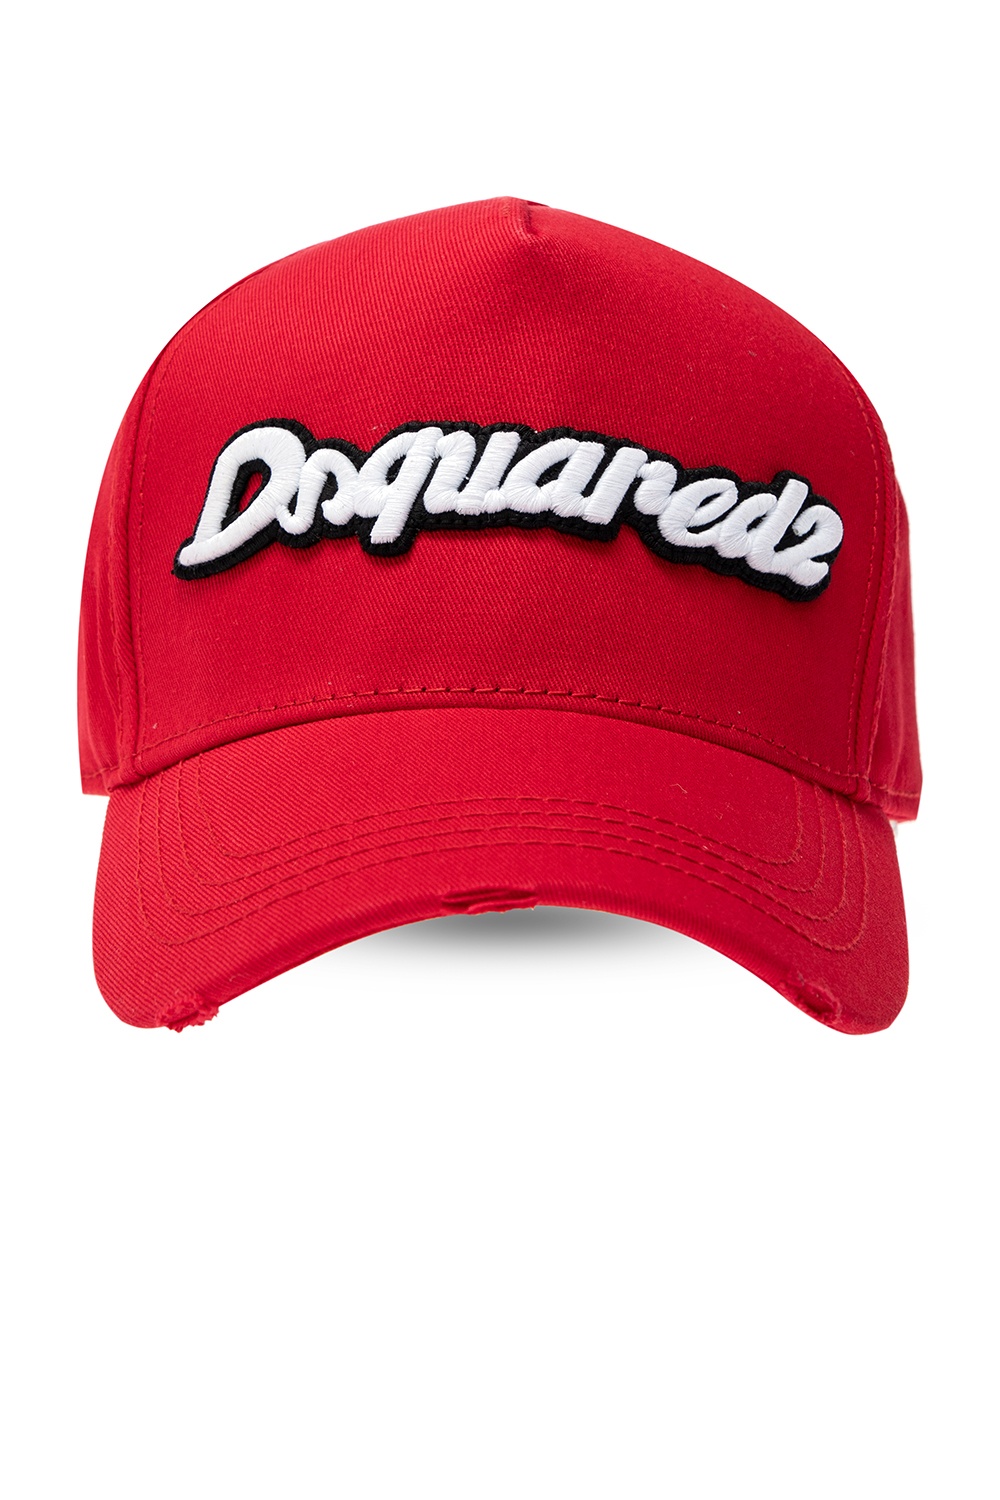 Dsquared2 Logo baseball cap